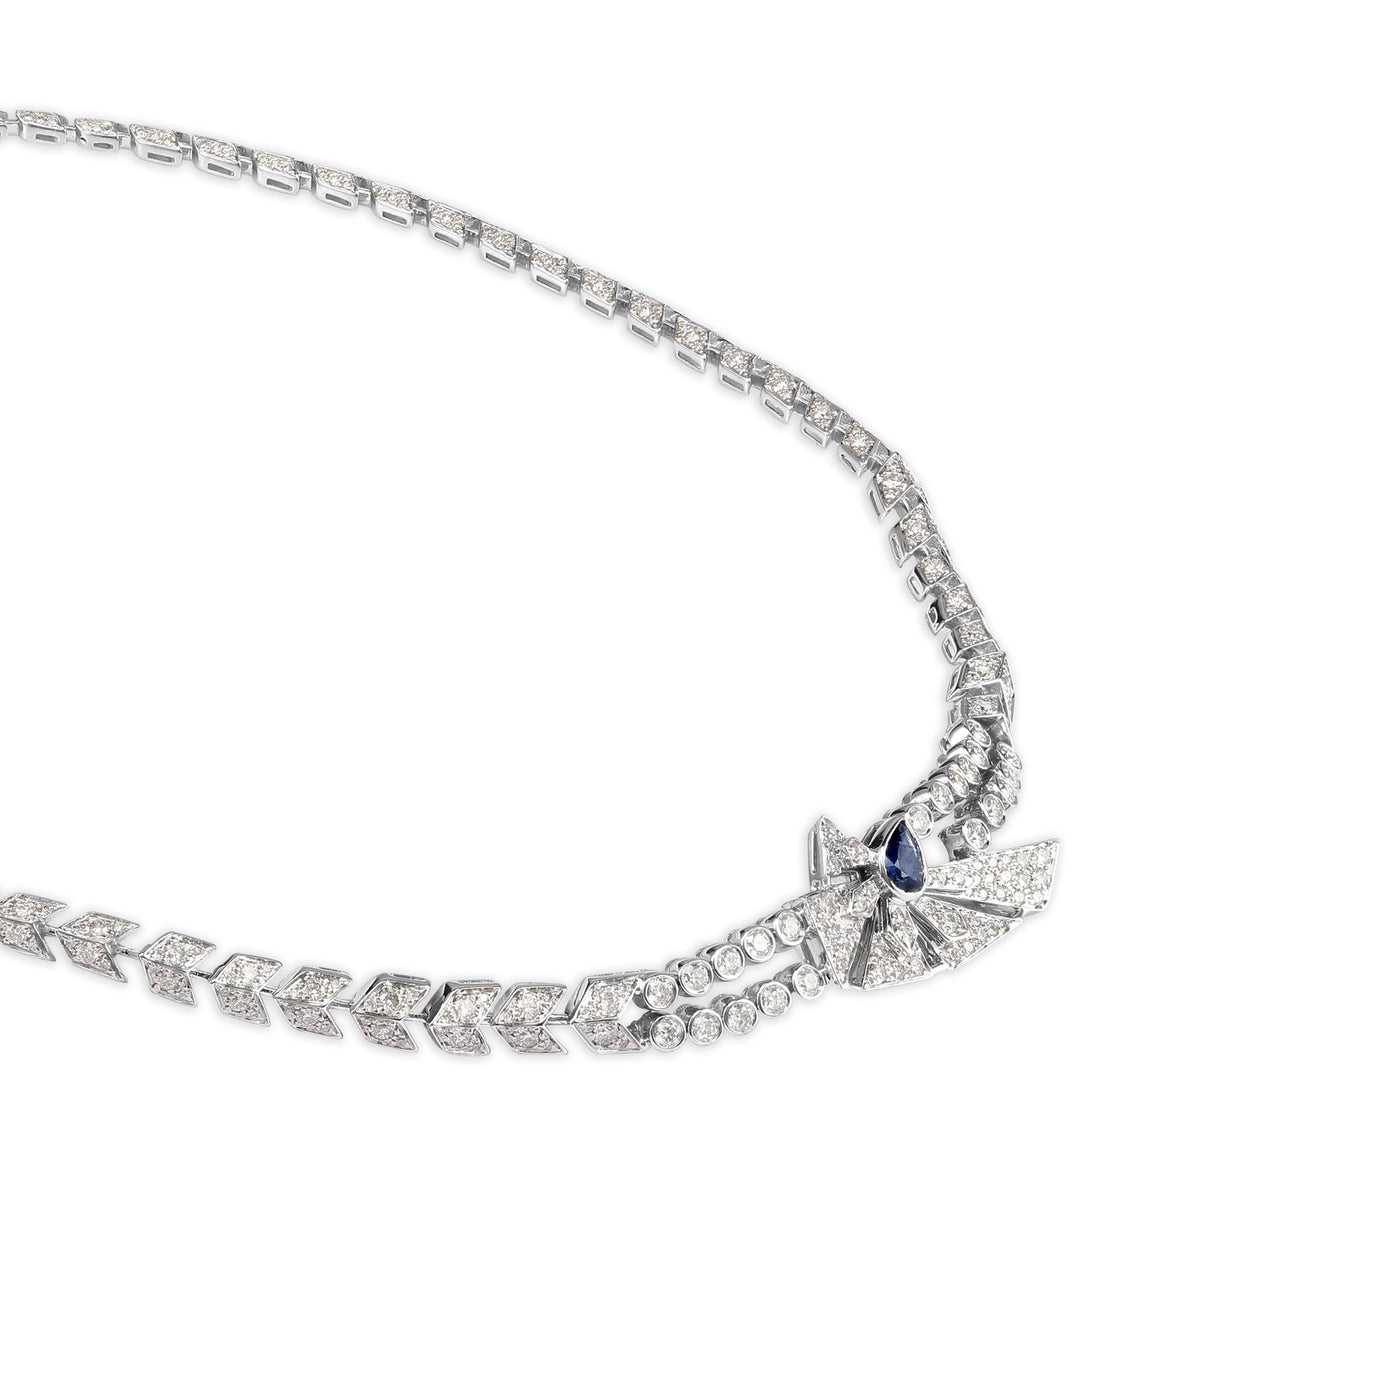 Diamond Choker with Natural blue sapphire